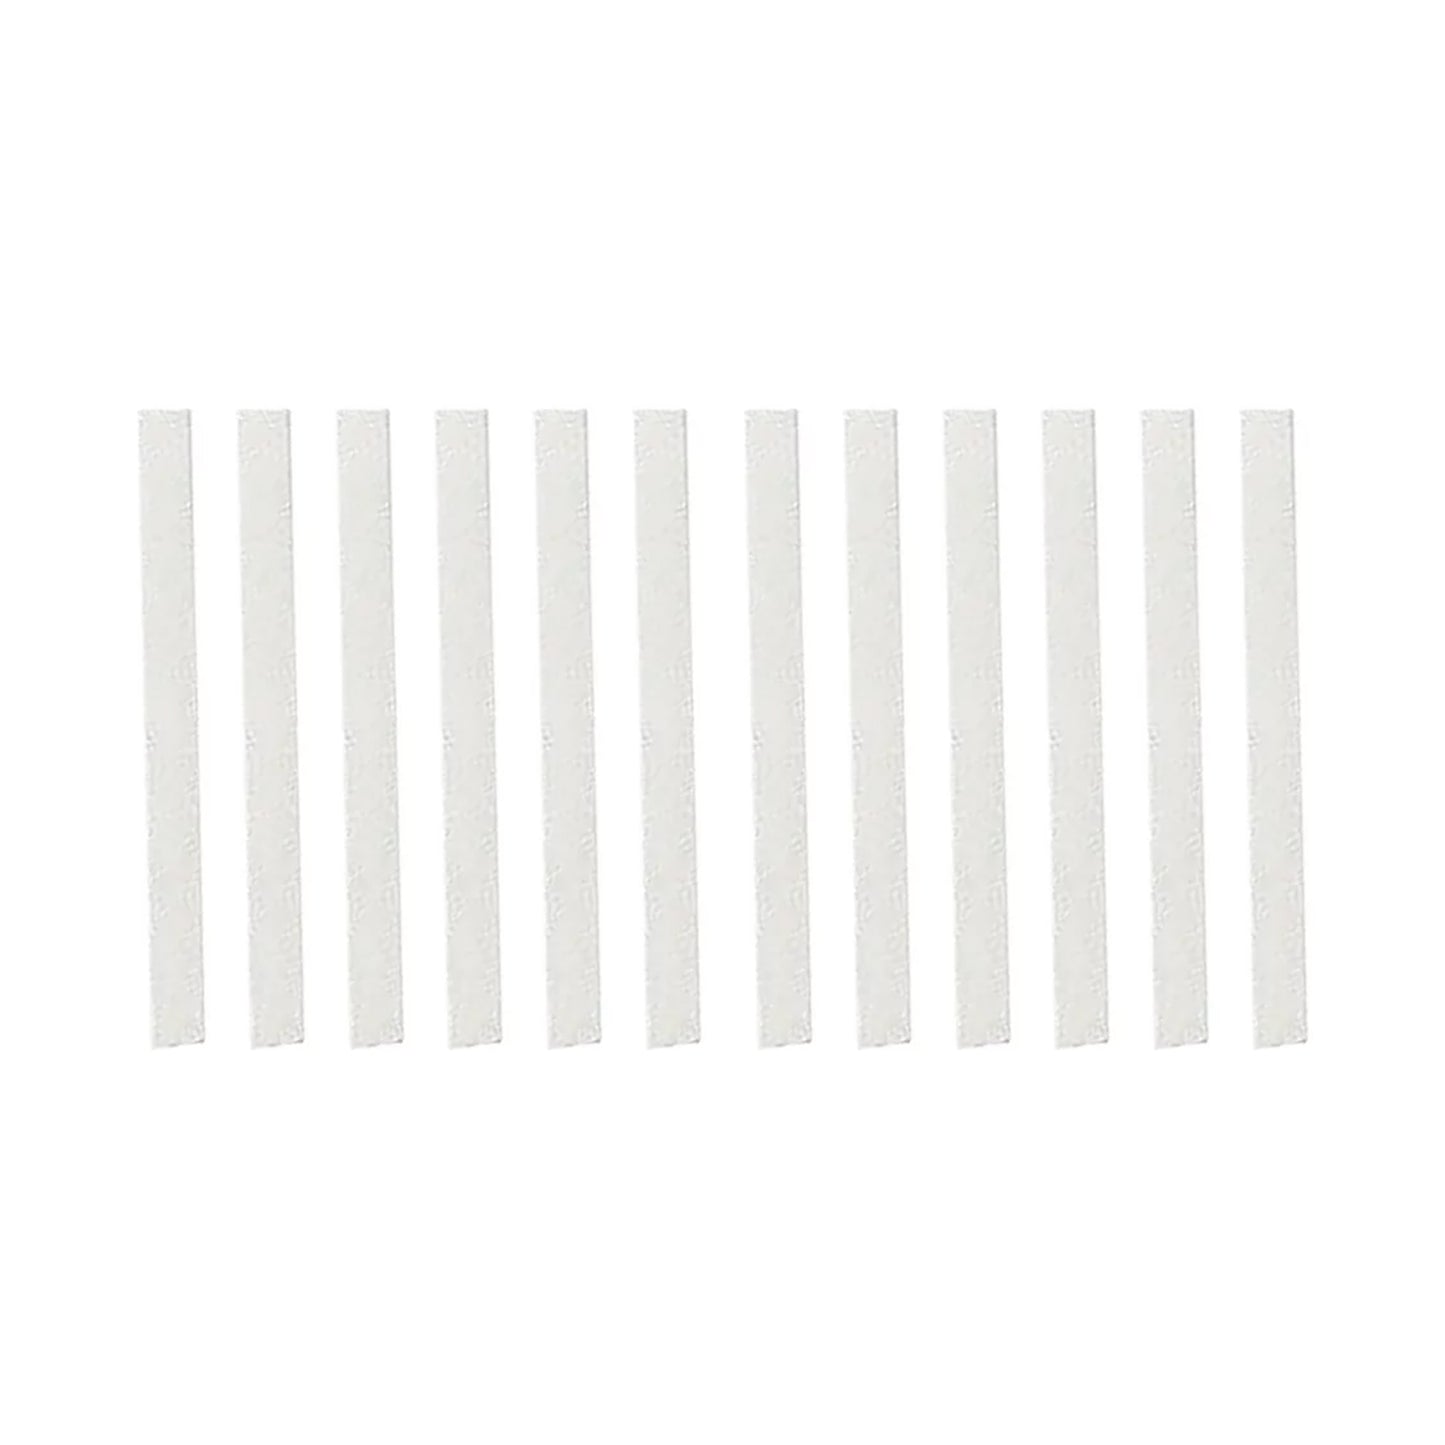 Funstuff Sketch Sticks - White